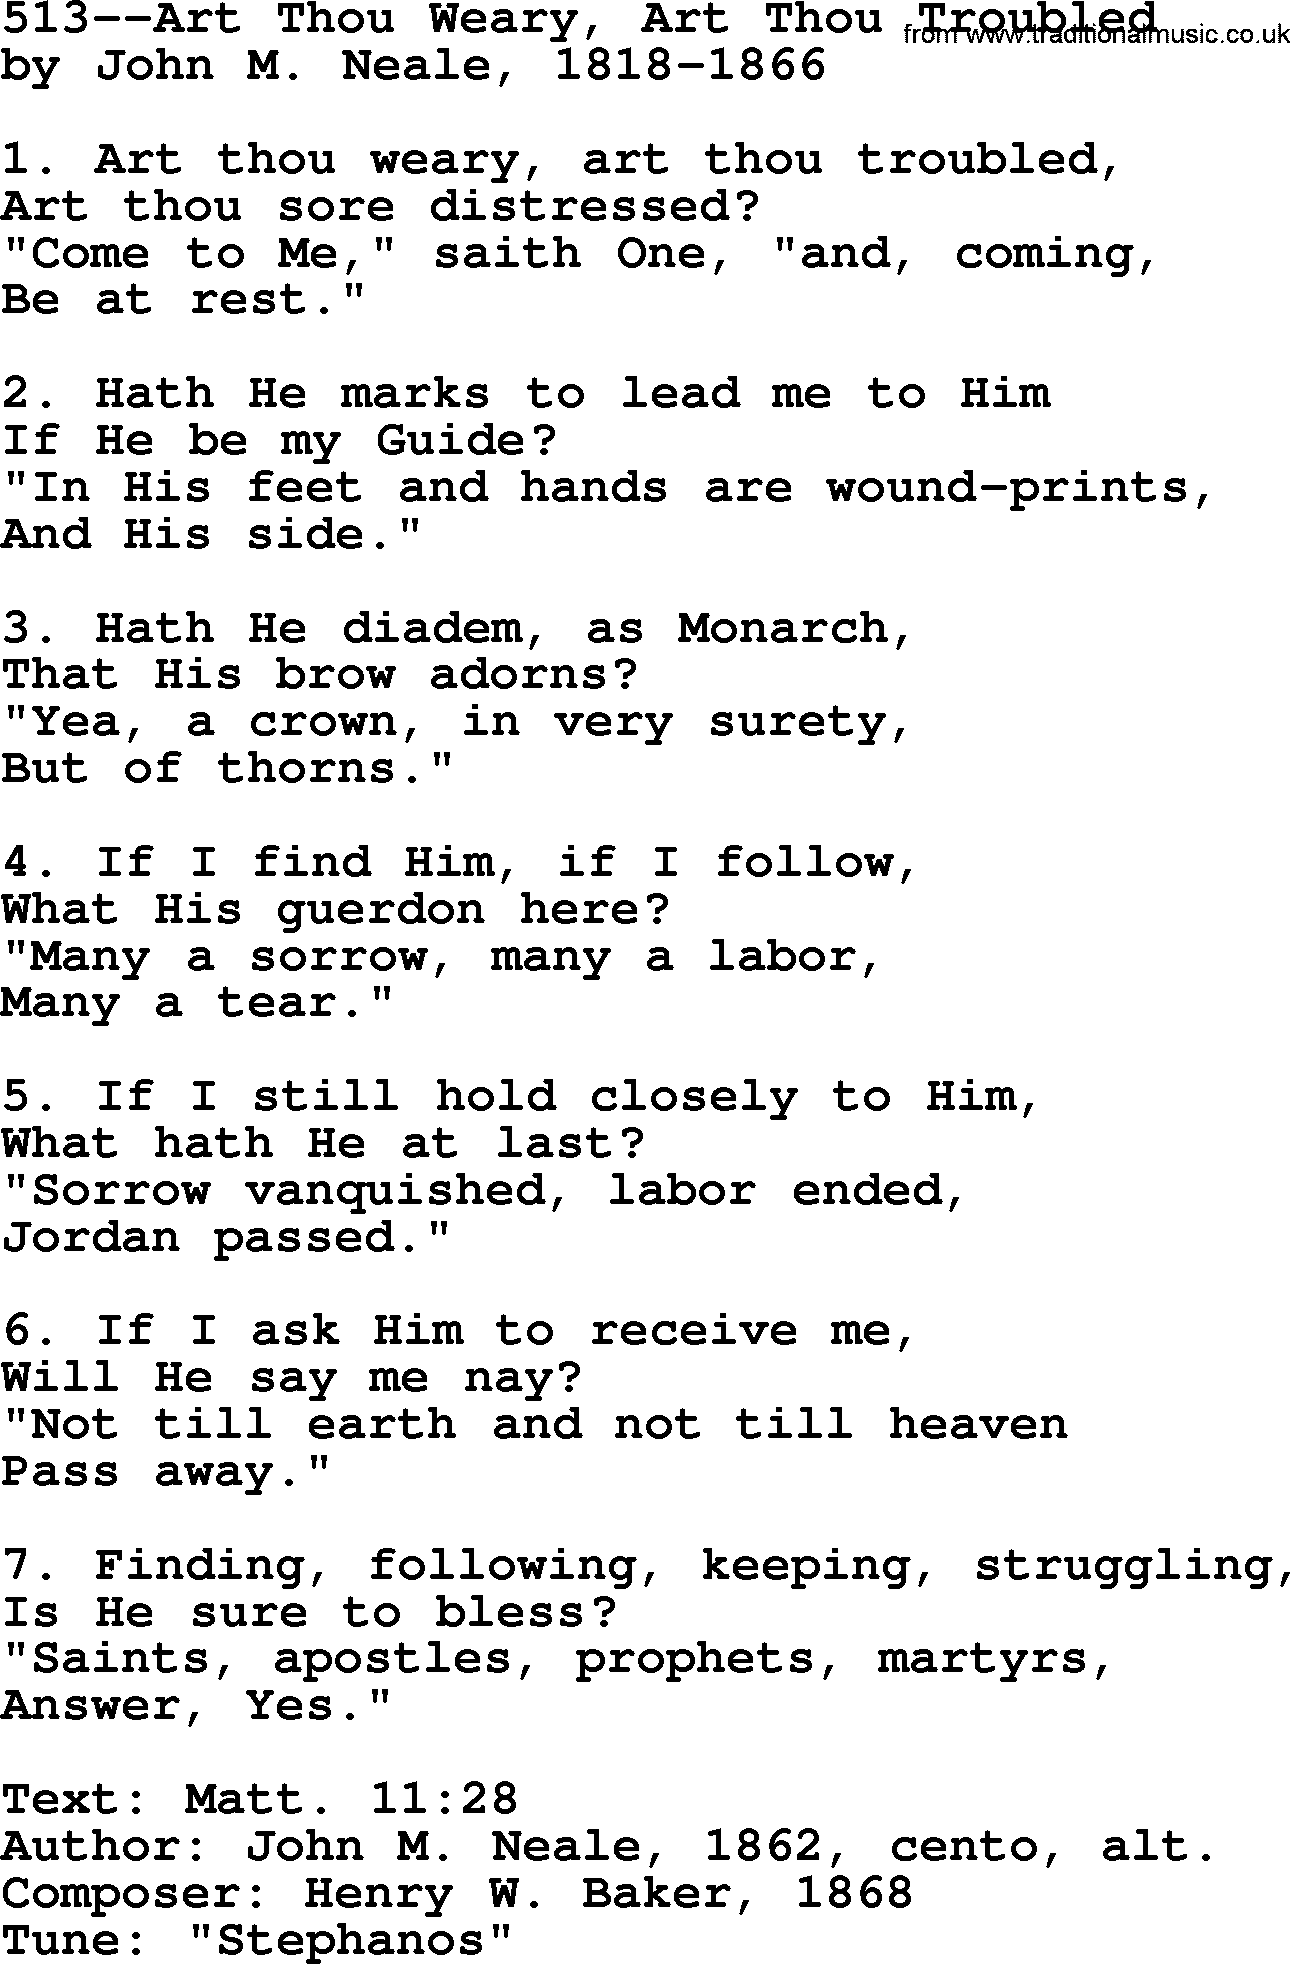 Lutheran Hymn: 513--Art Thou Weary, Art Thou Troubled.txt lyrics with PDF